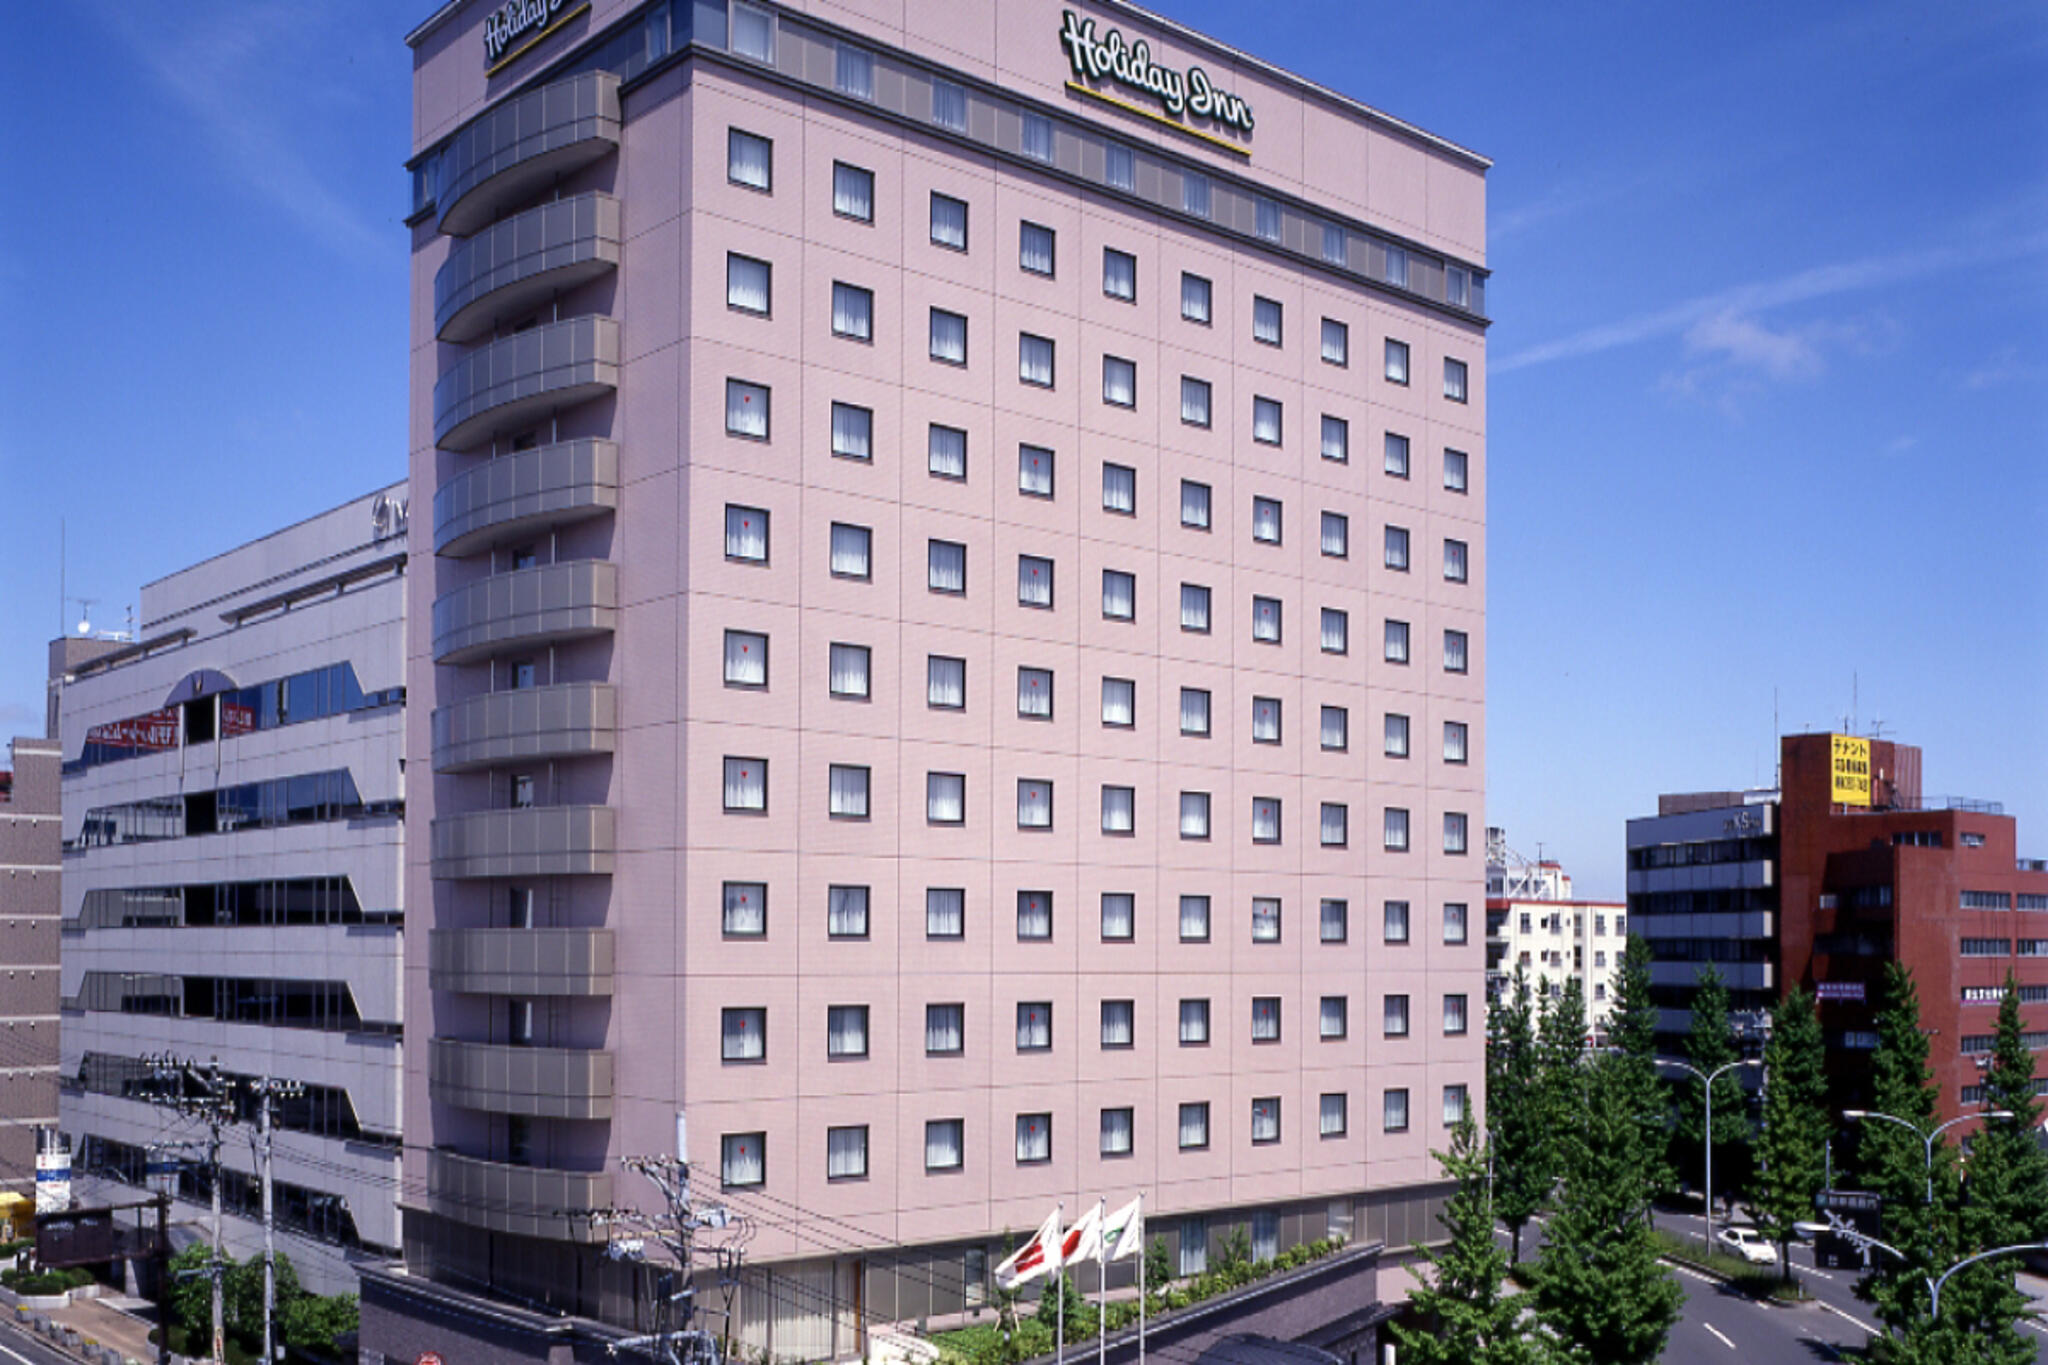 ANAクラウンプラザホテル ホリデイ・イン仙台の代表写真9